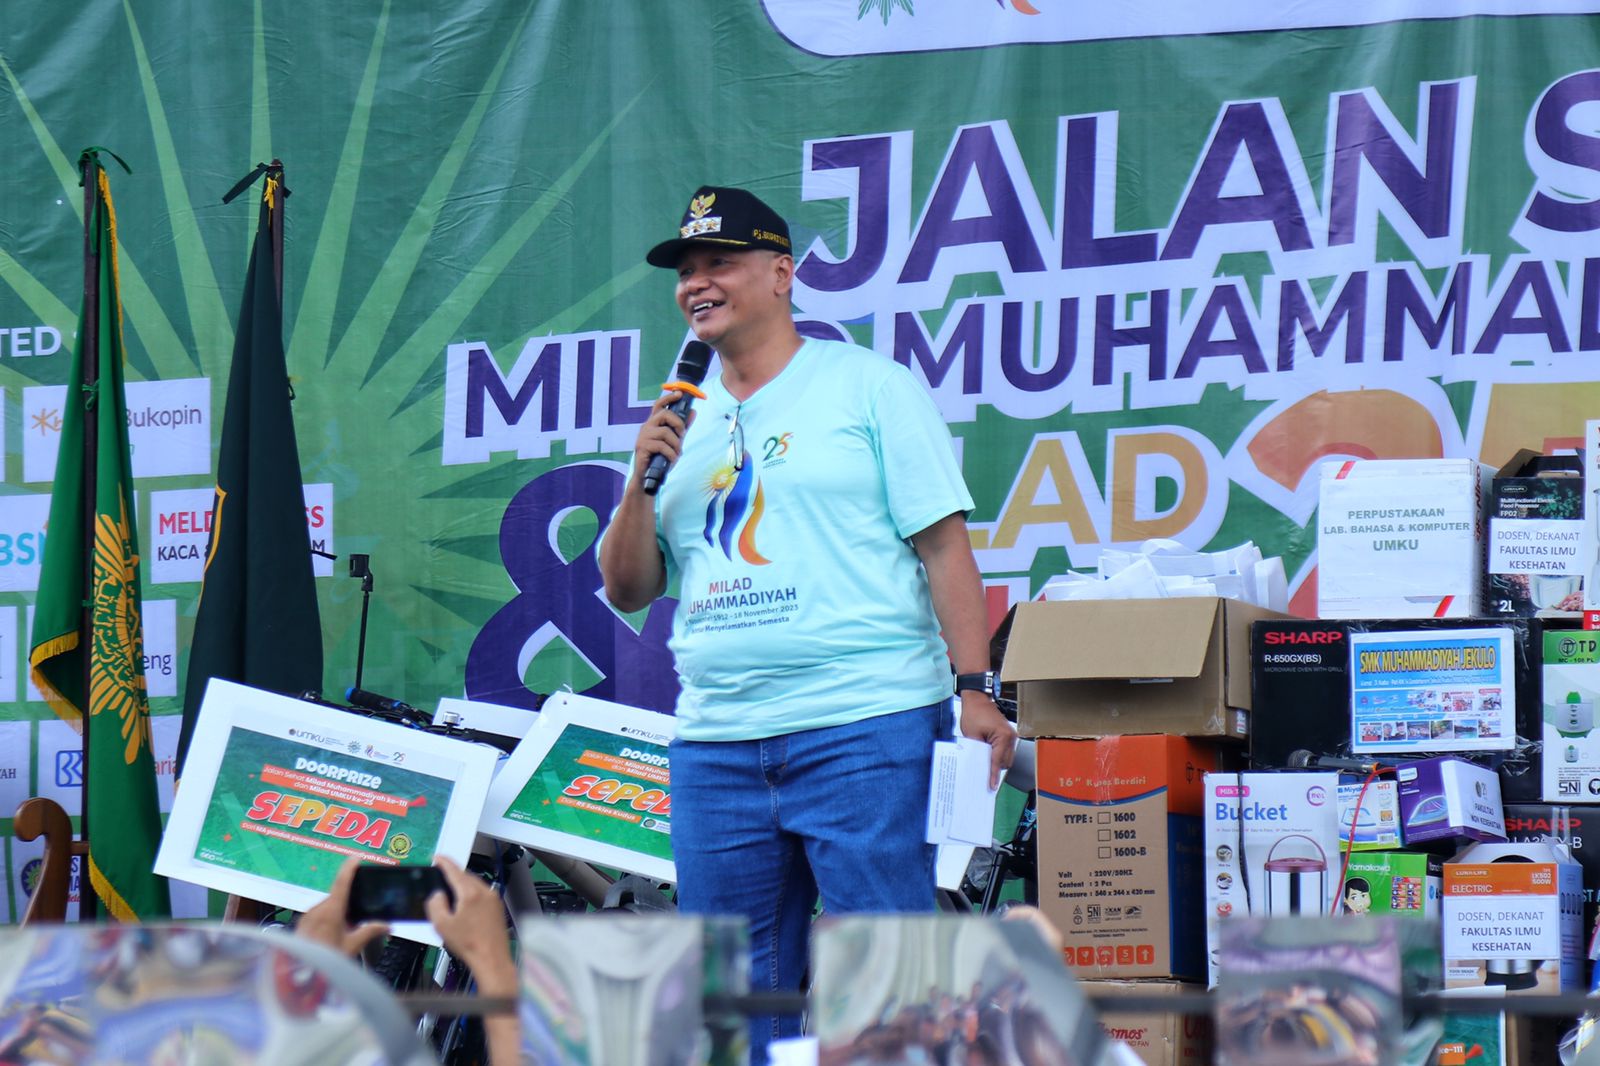 Pj Bupati Kudus Ajak Masyarakat Jalan Sehat dalam Peringatan Milad Muhammadiyah dan UMKU